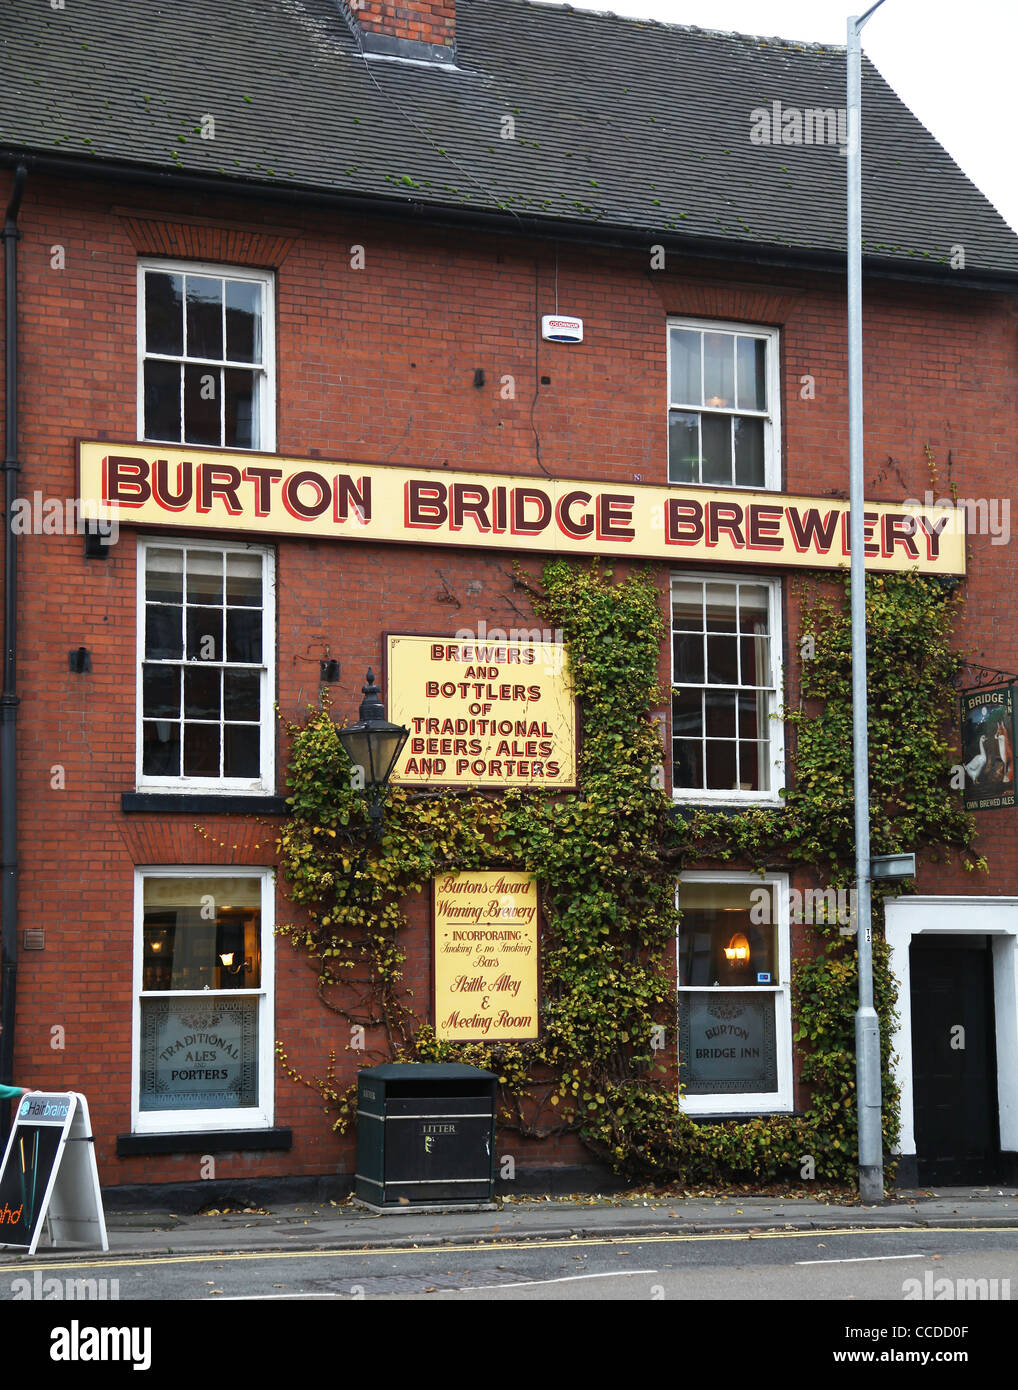 Burton Bridge Brewery, Burton upon Trent, Staffordshire Stock Photo - Alamy